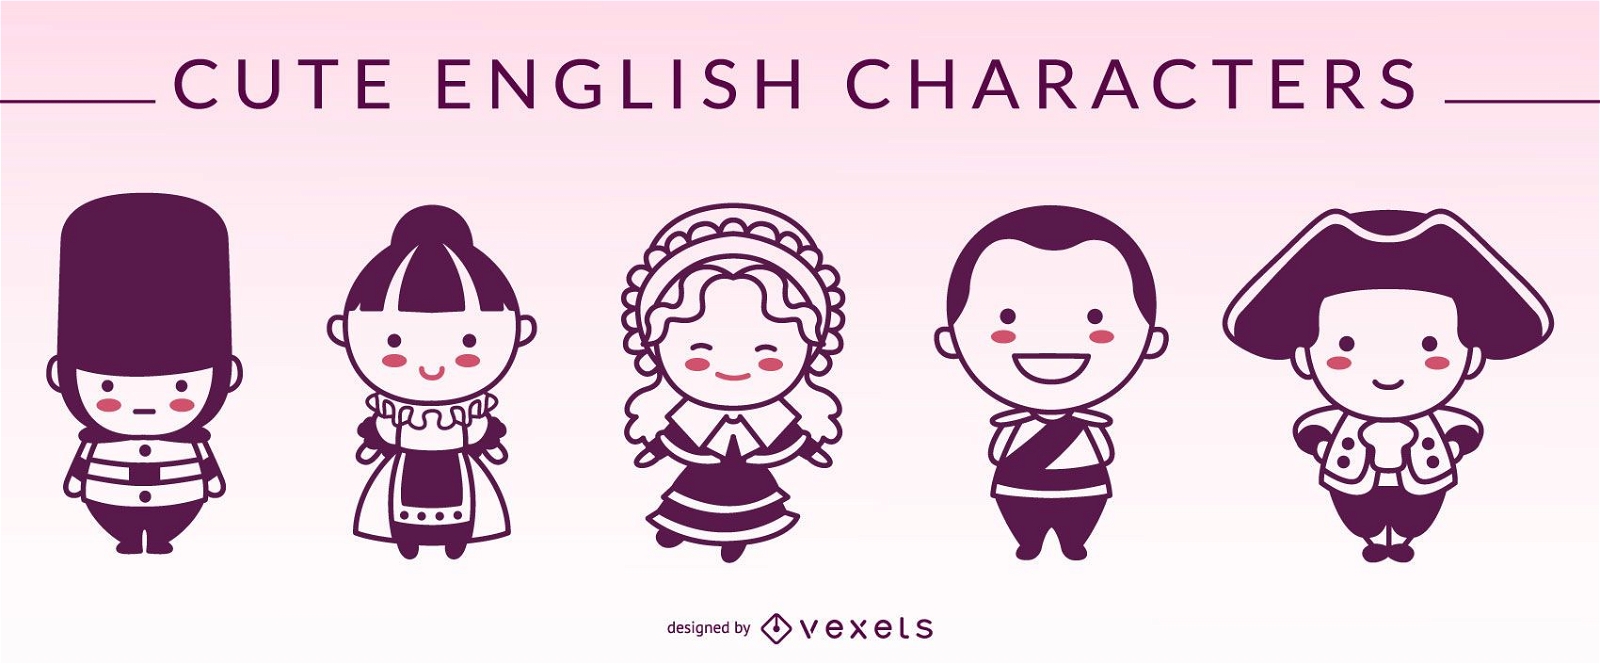 Siluetas de personajes ingleses lindos